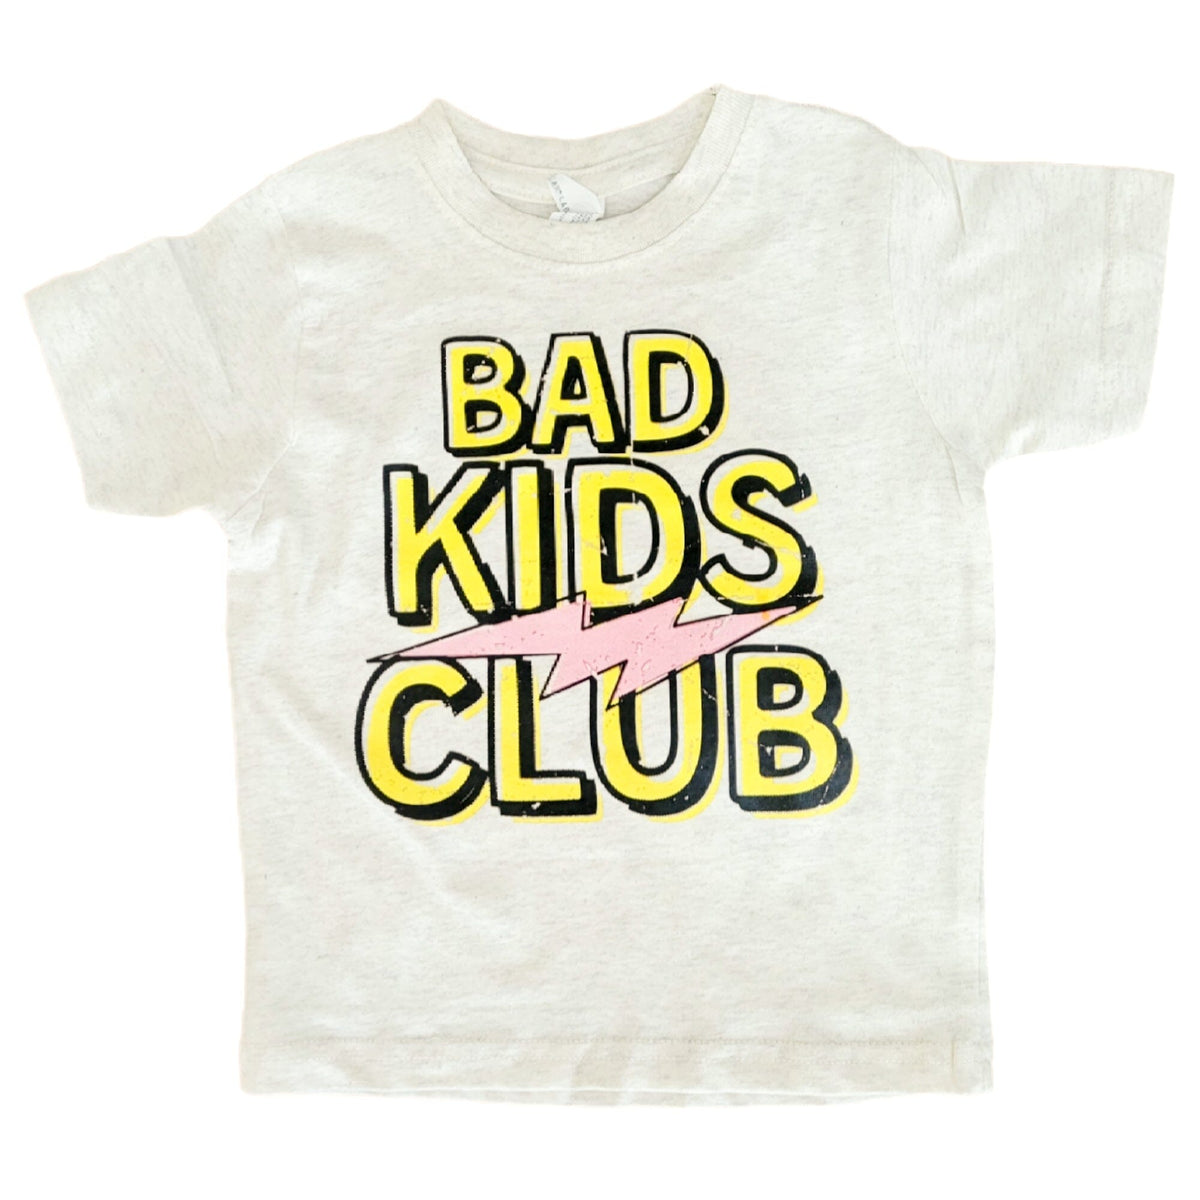 Bad Kids Club Tee